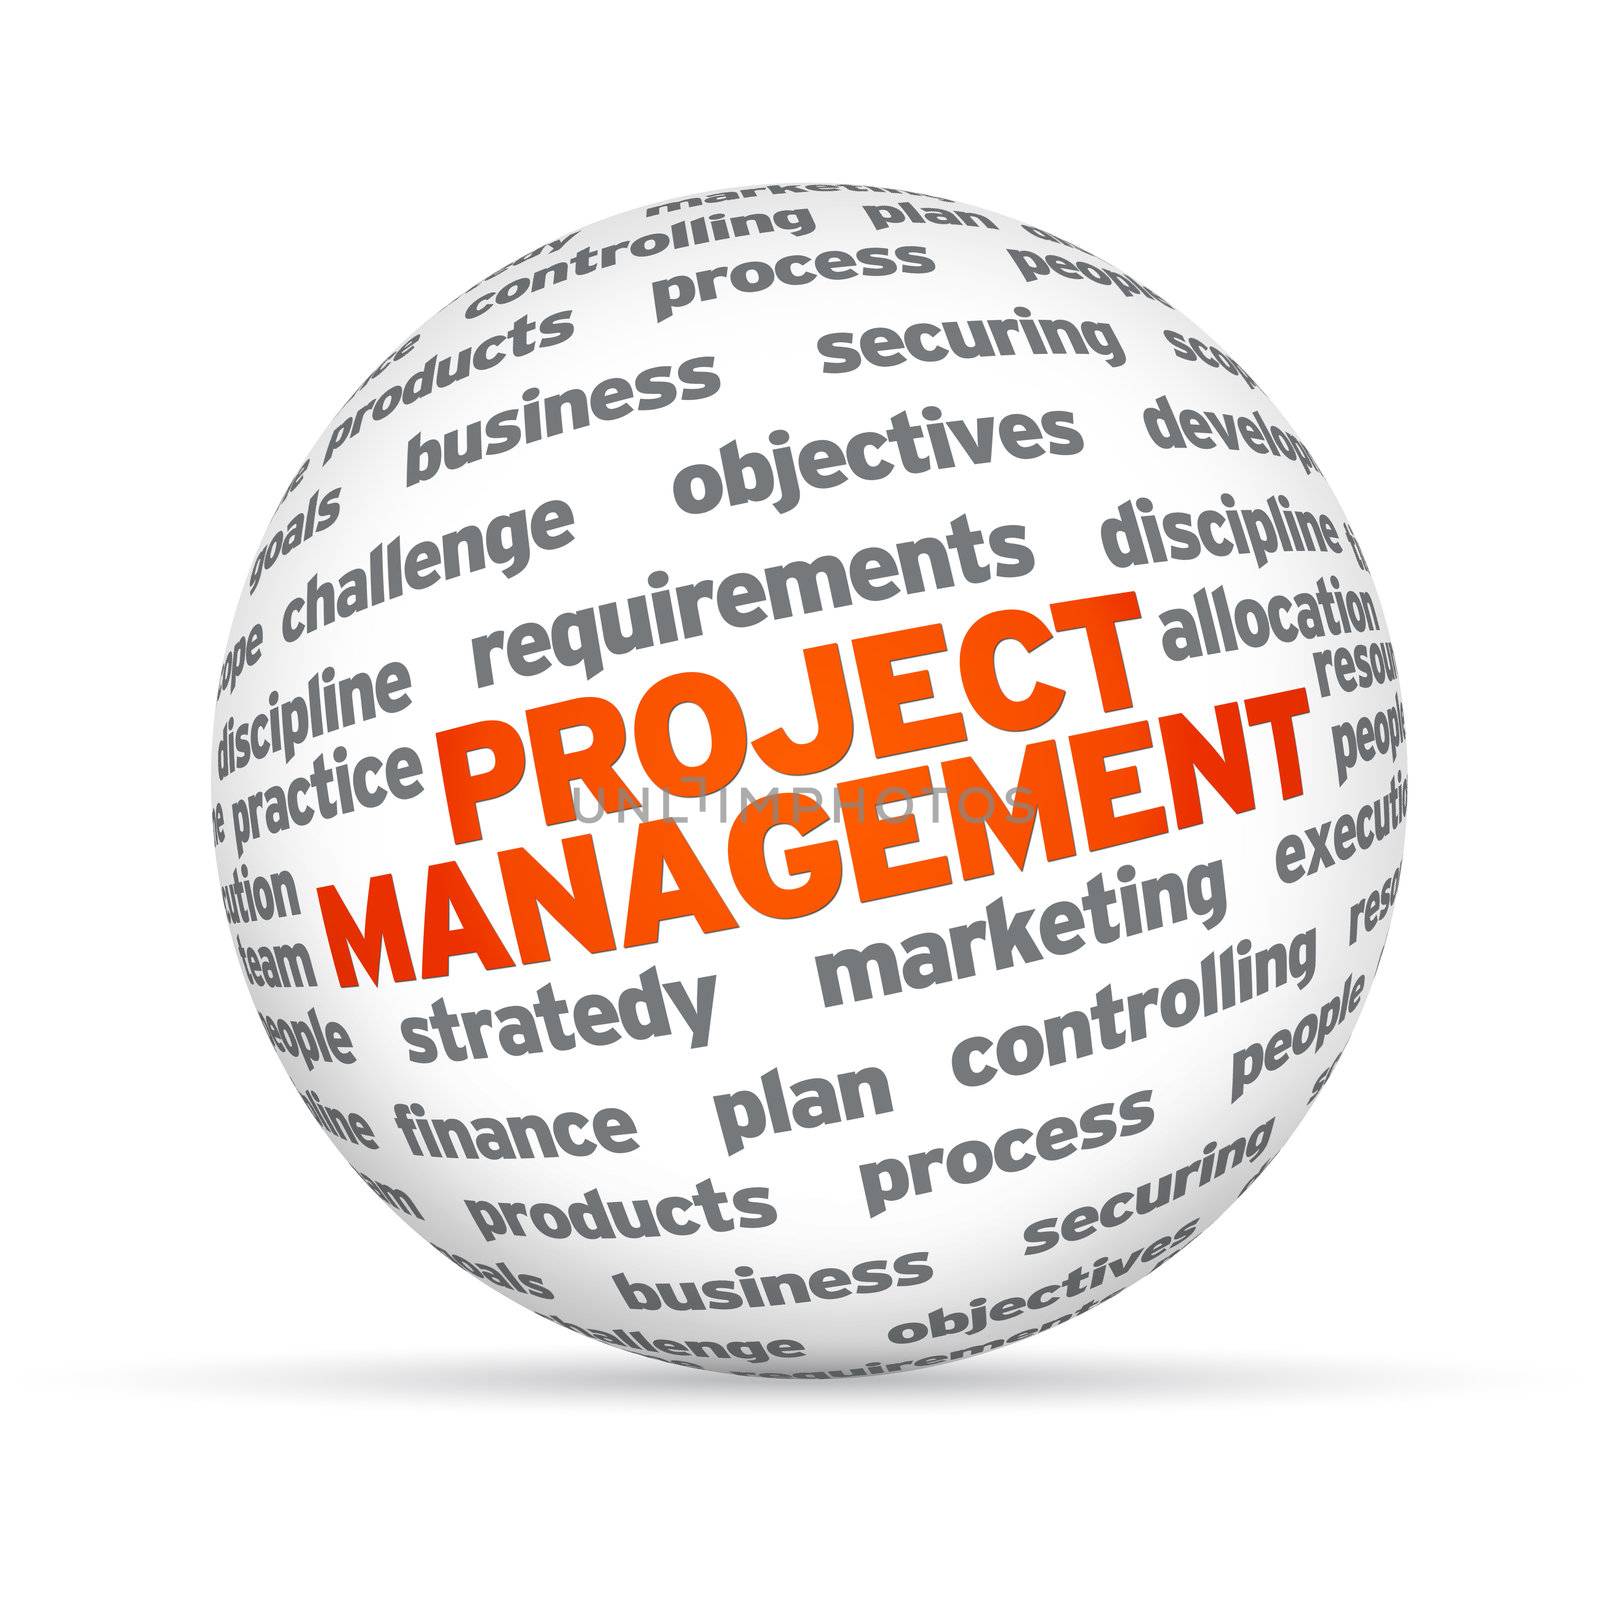 Project Management by kbuntu